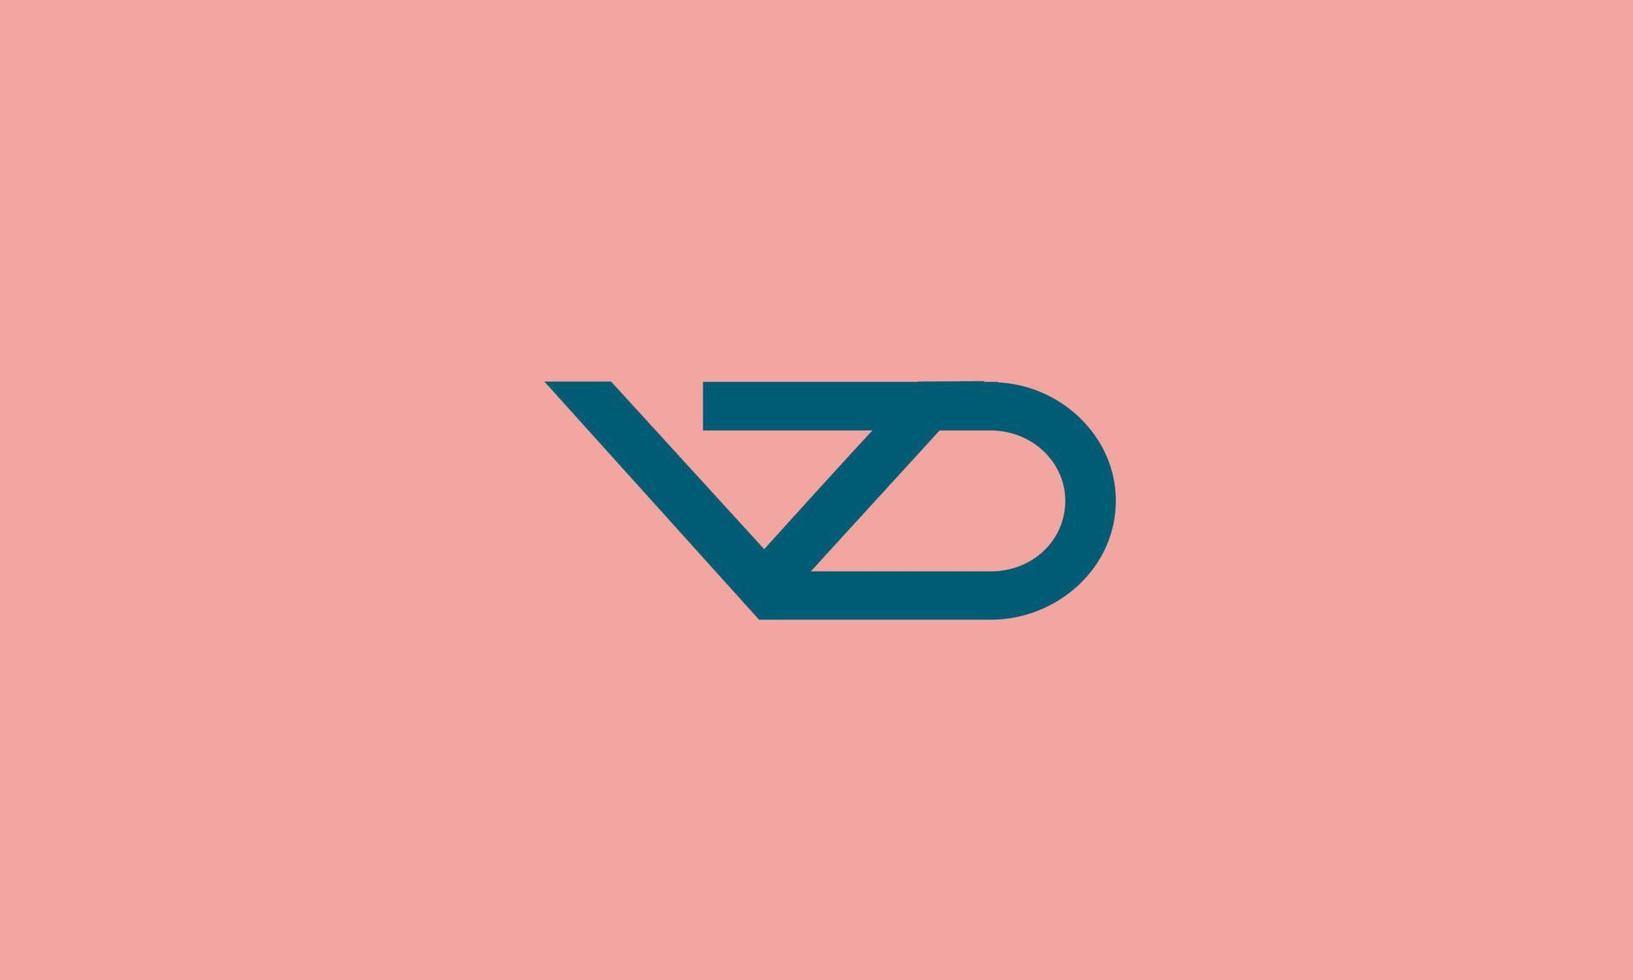 letras do alfabeto iniciais monograma logotipo vd, dv, v e d vetor